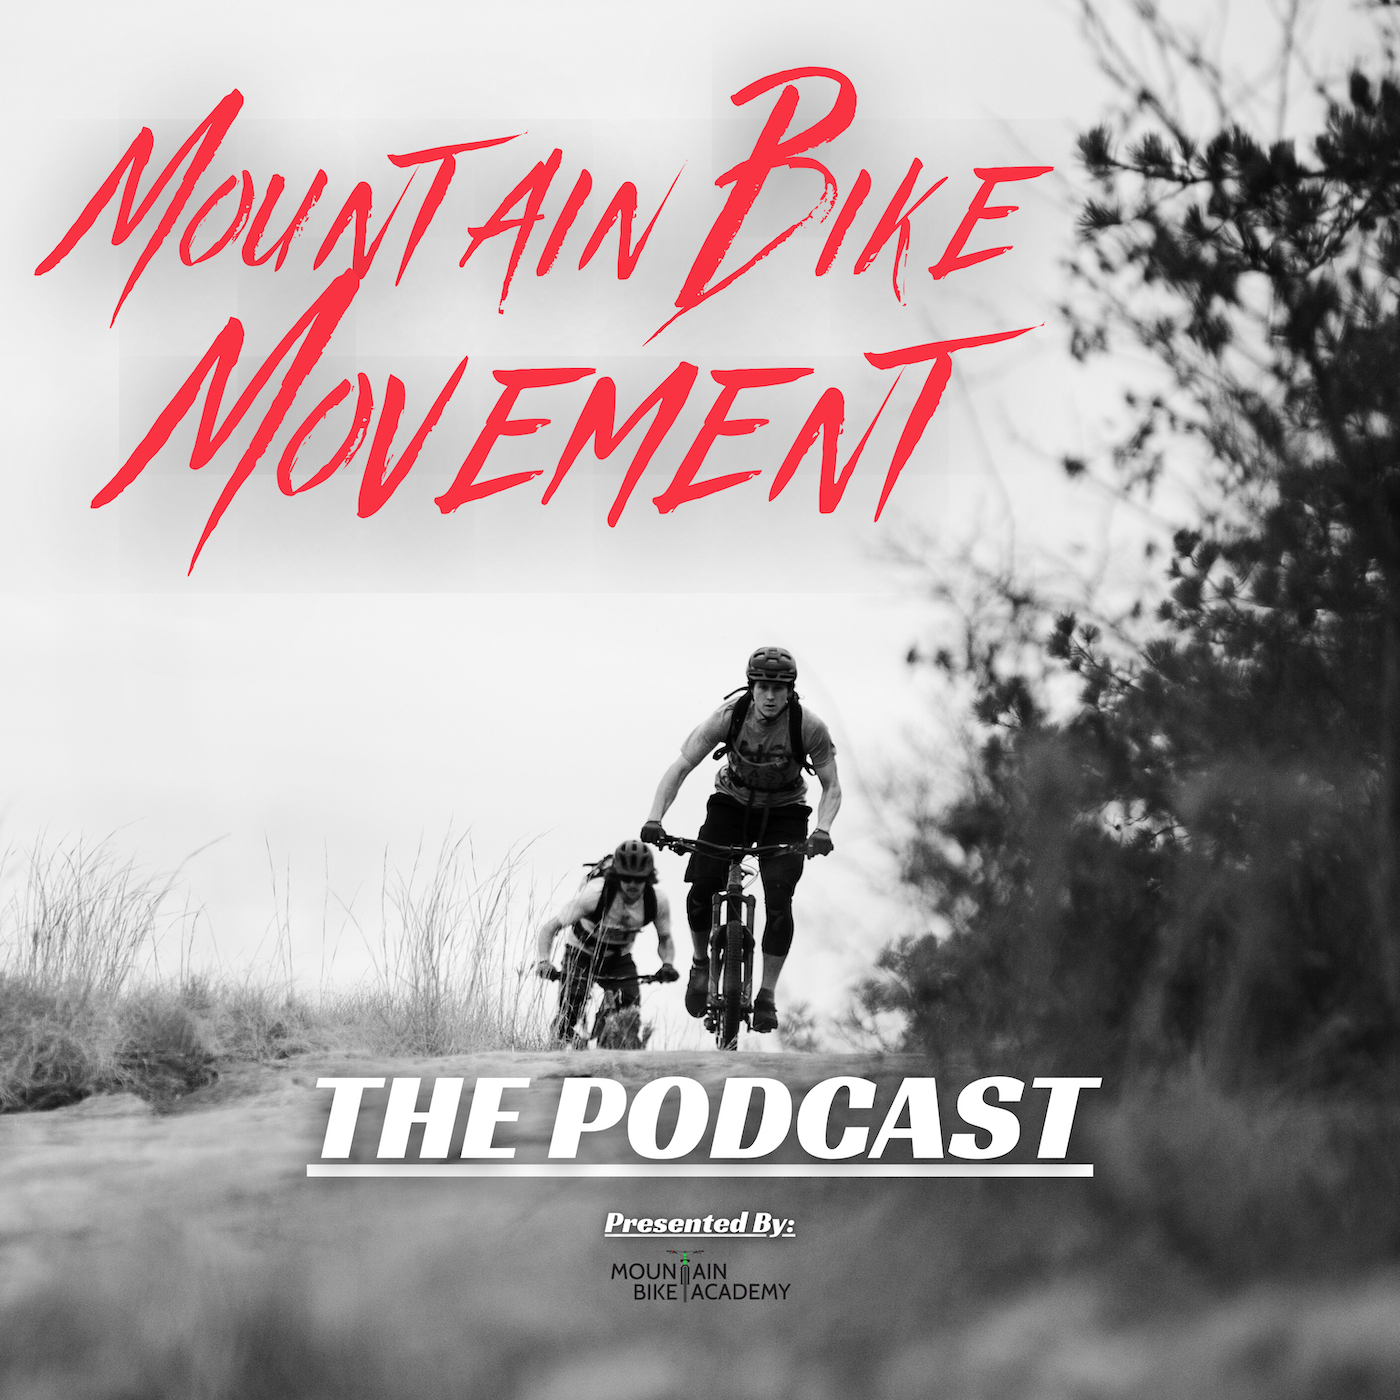 Welcome to Mountain Bike Movement!